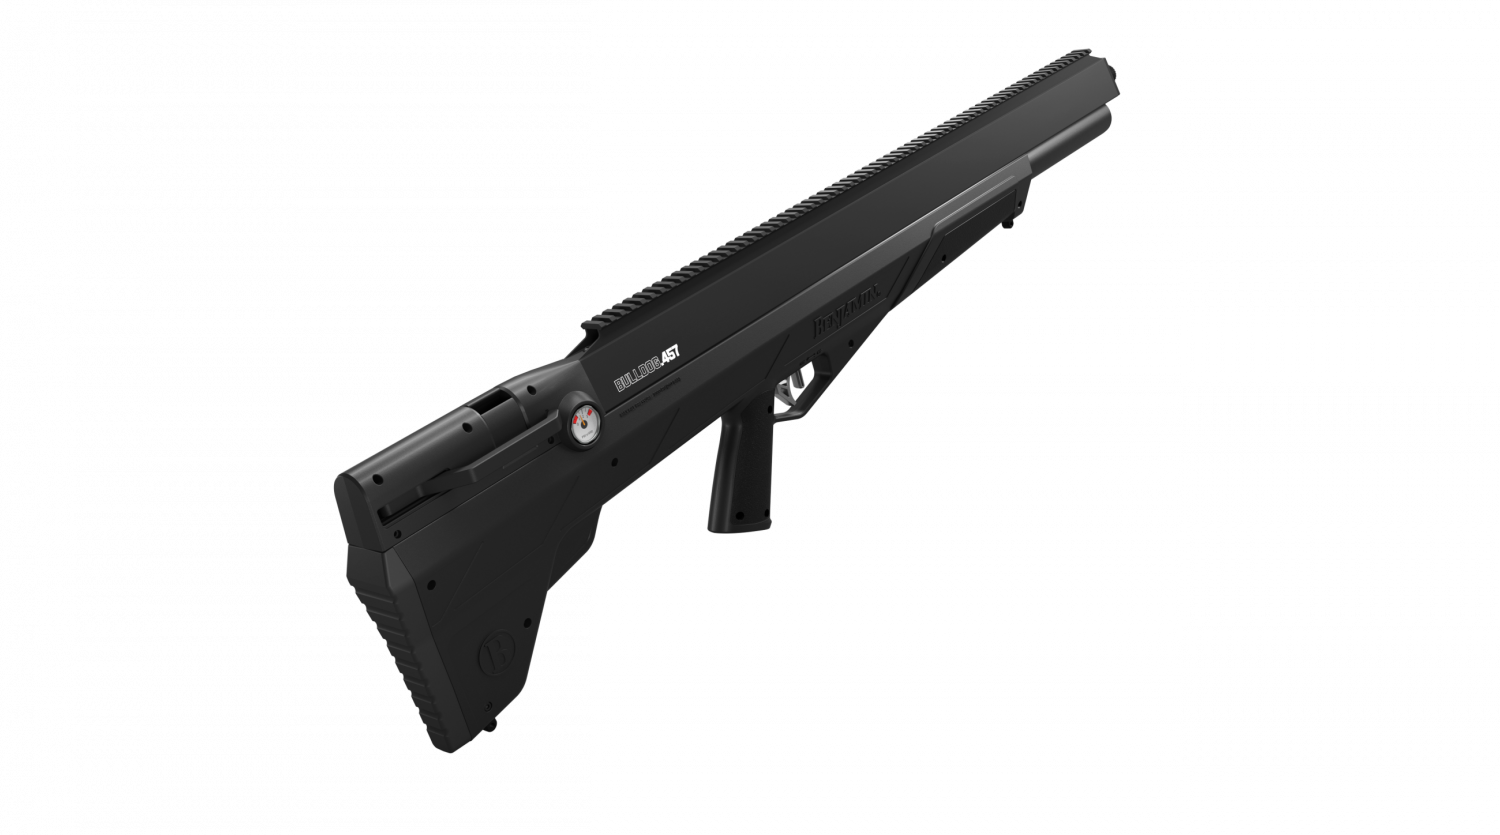 The New Benjamin Bulldog 457 - The Most Powerful PCP Air Rifle